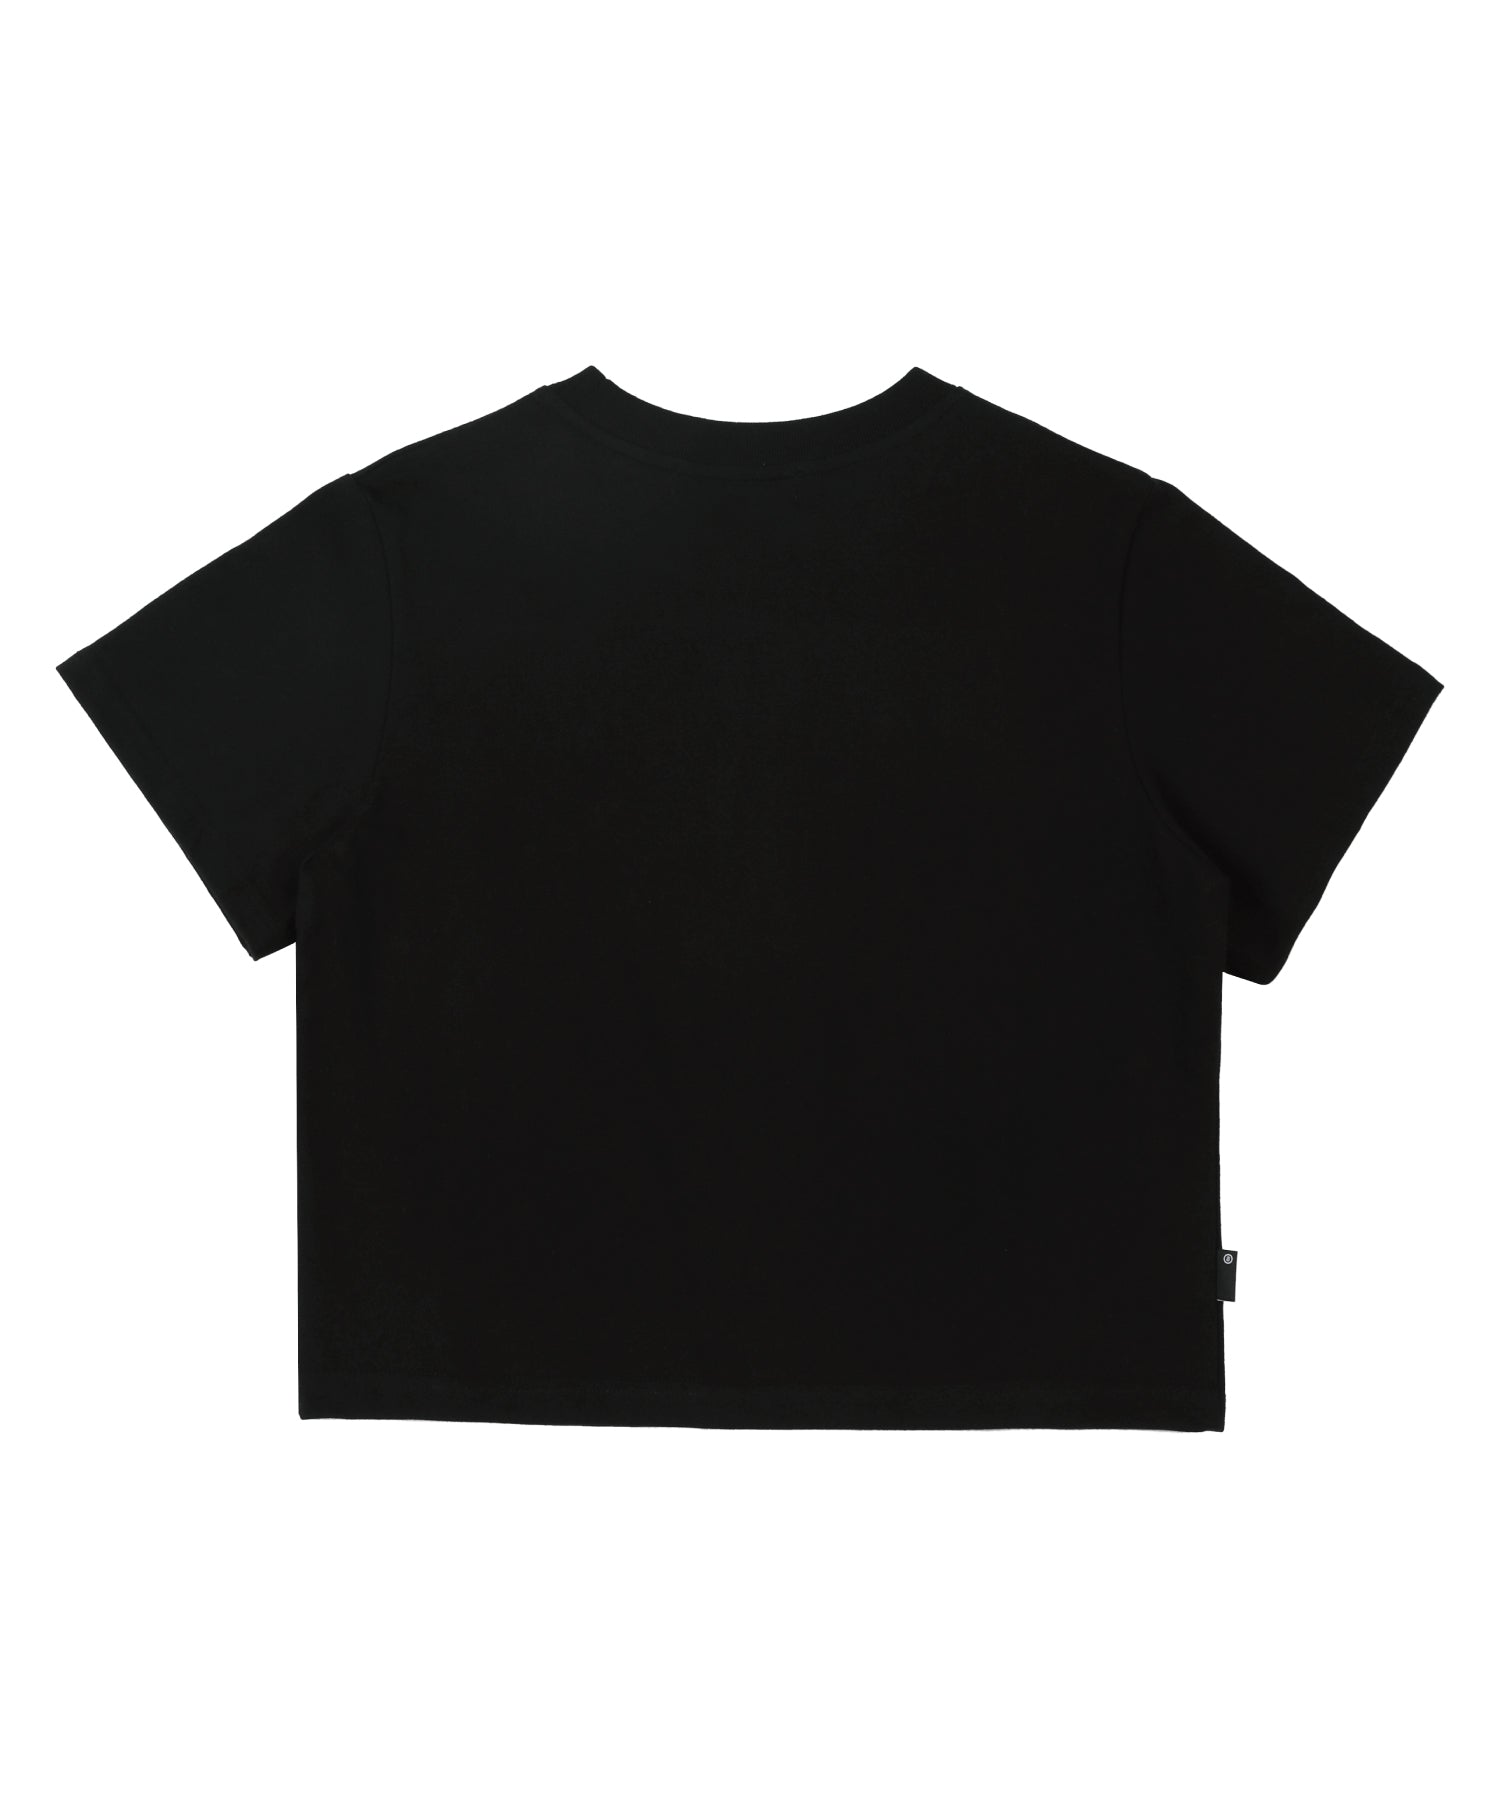 Catching Eye Crop T-Shirt in Black